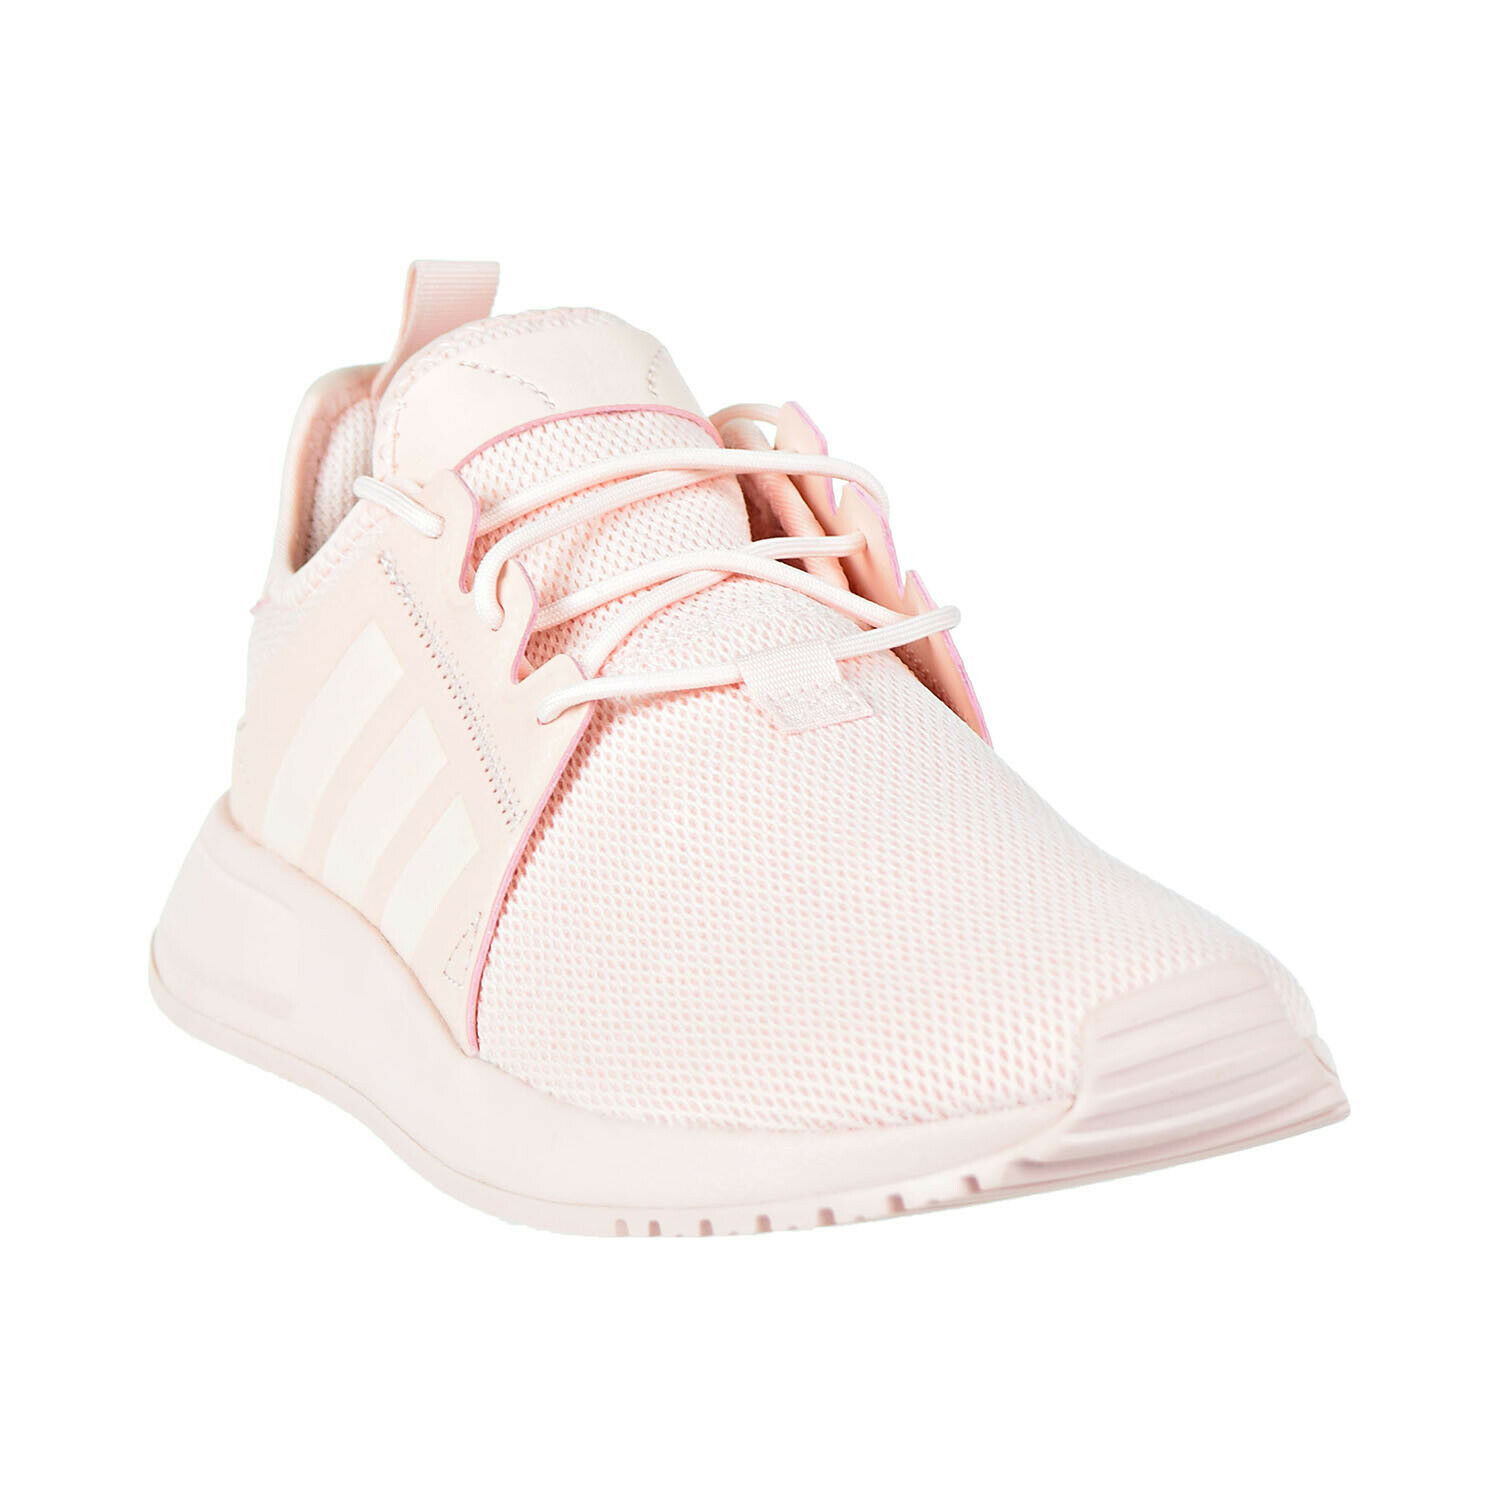 adidas x_plr athletic shoe ice pink